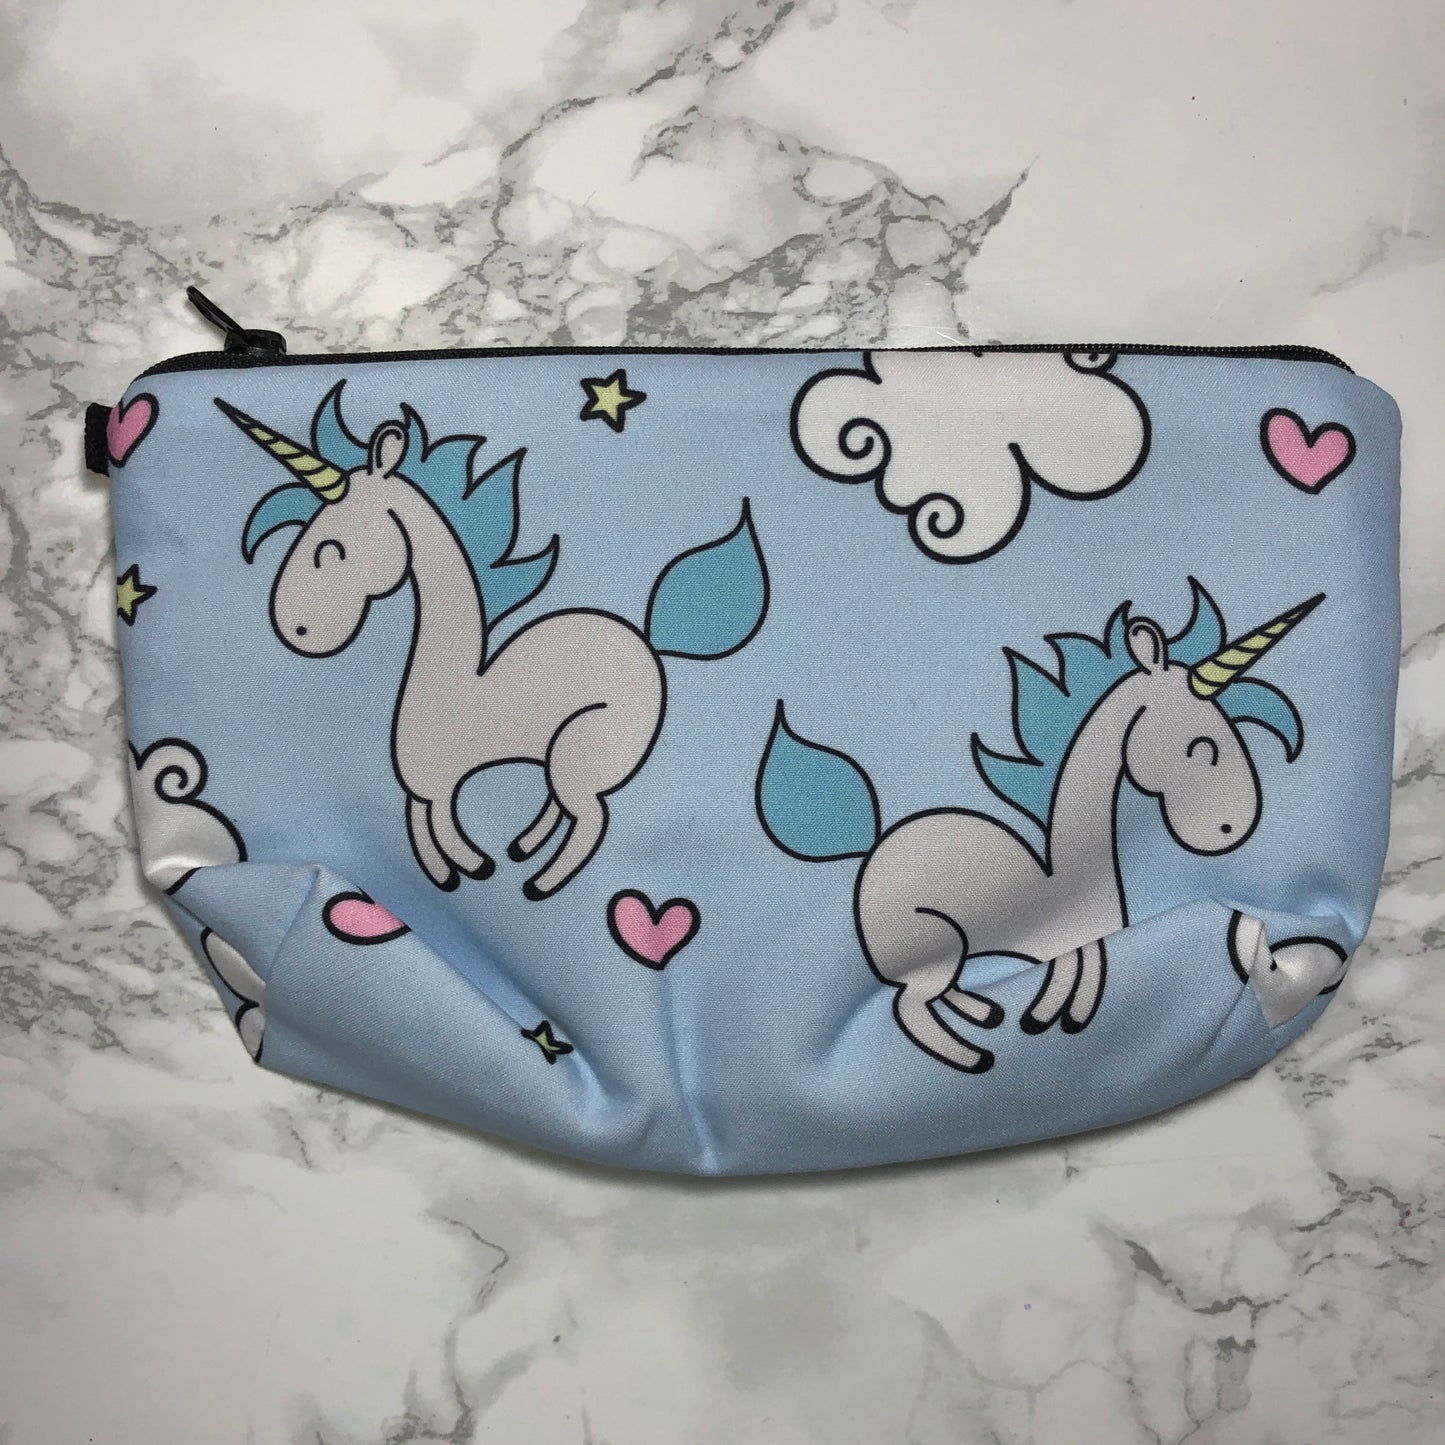 Blue - Unicorns and Clouds - Unicorn Makeup Bag